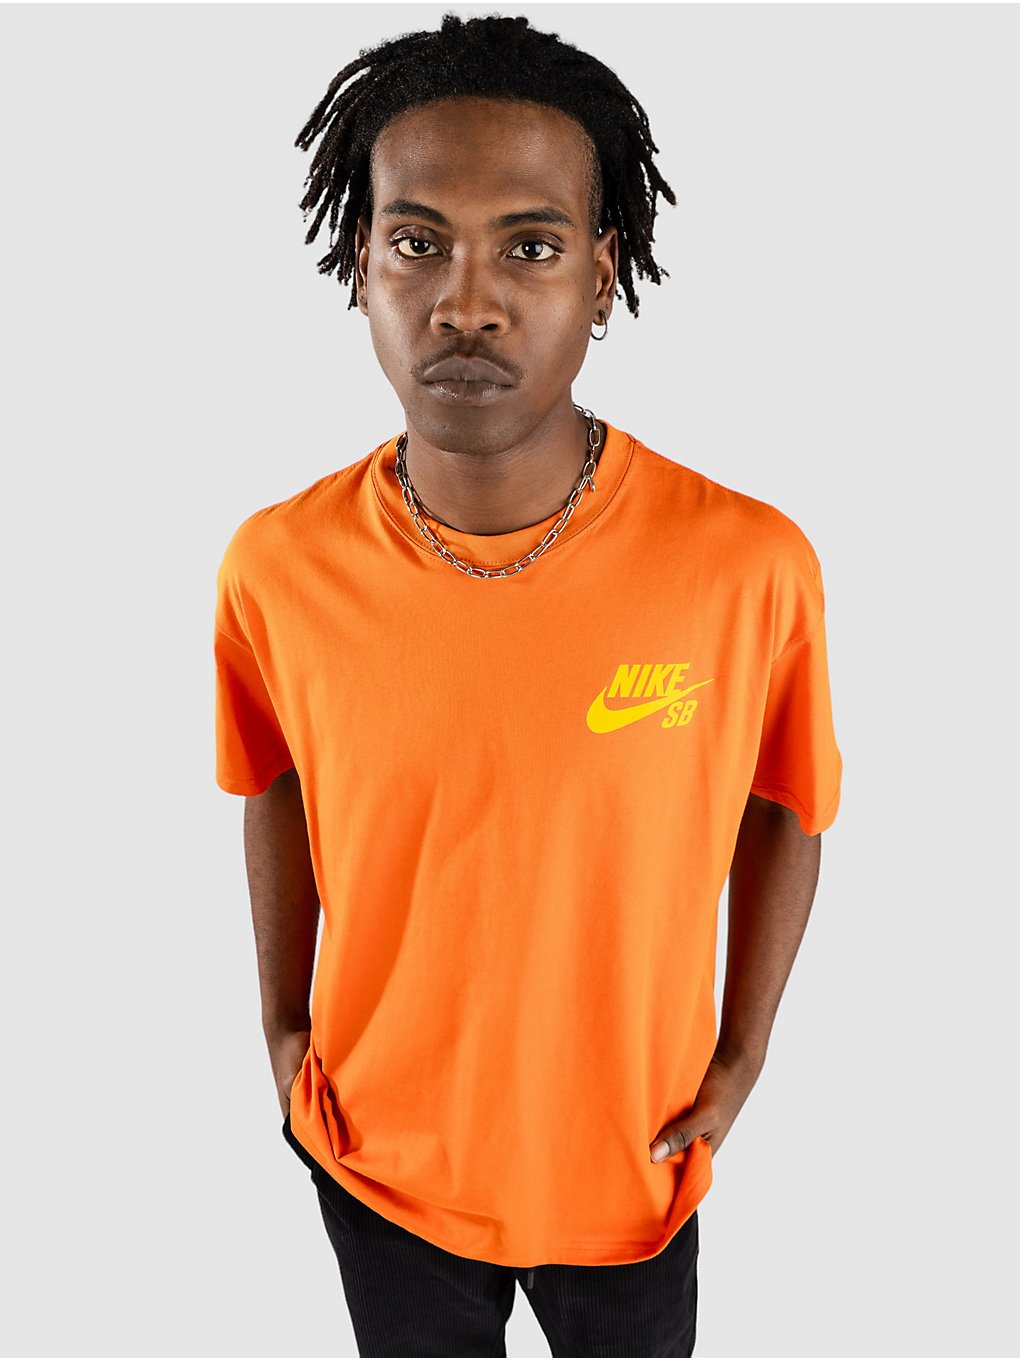 Nike Sb Logo T-Shirt campfire orange kaufen